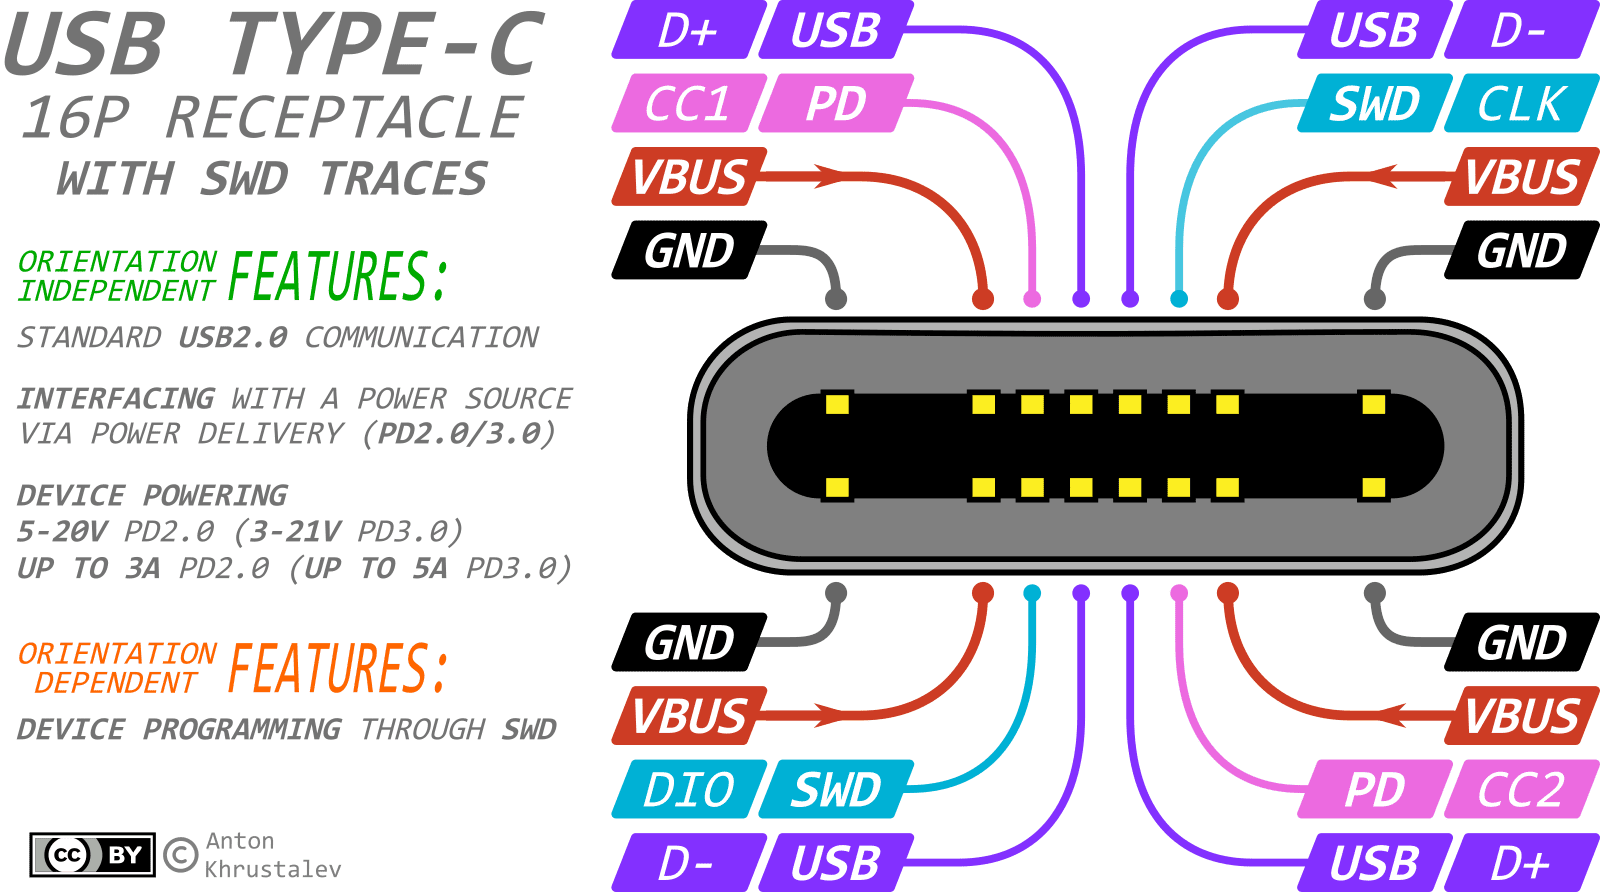 USB Type-C with SWD